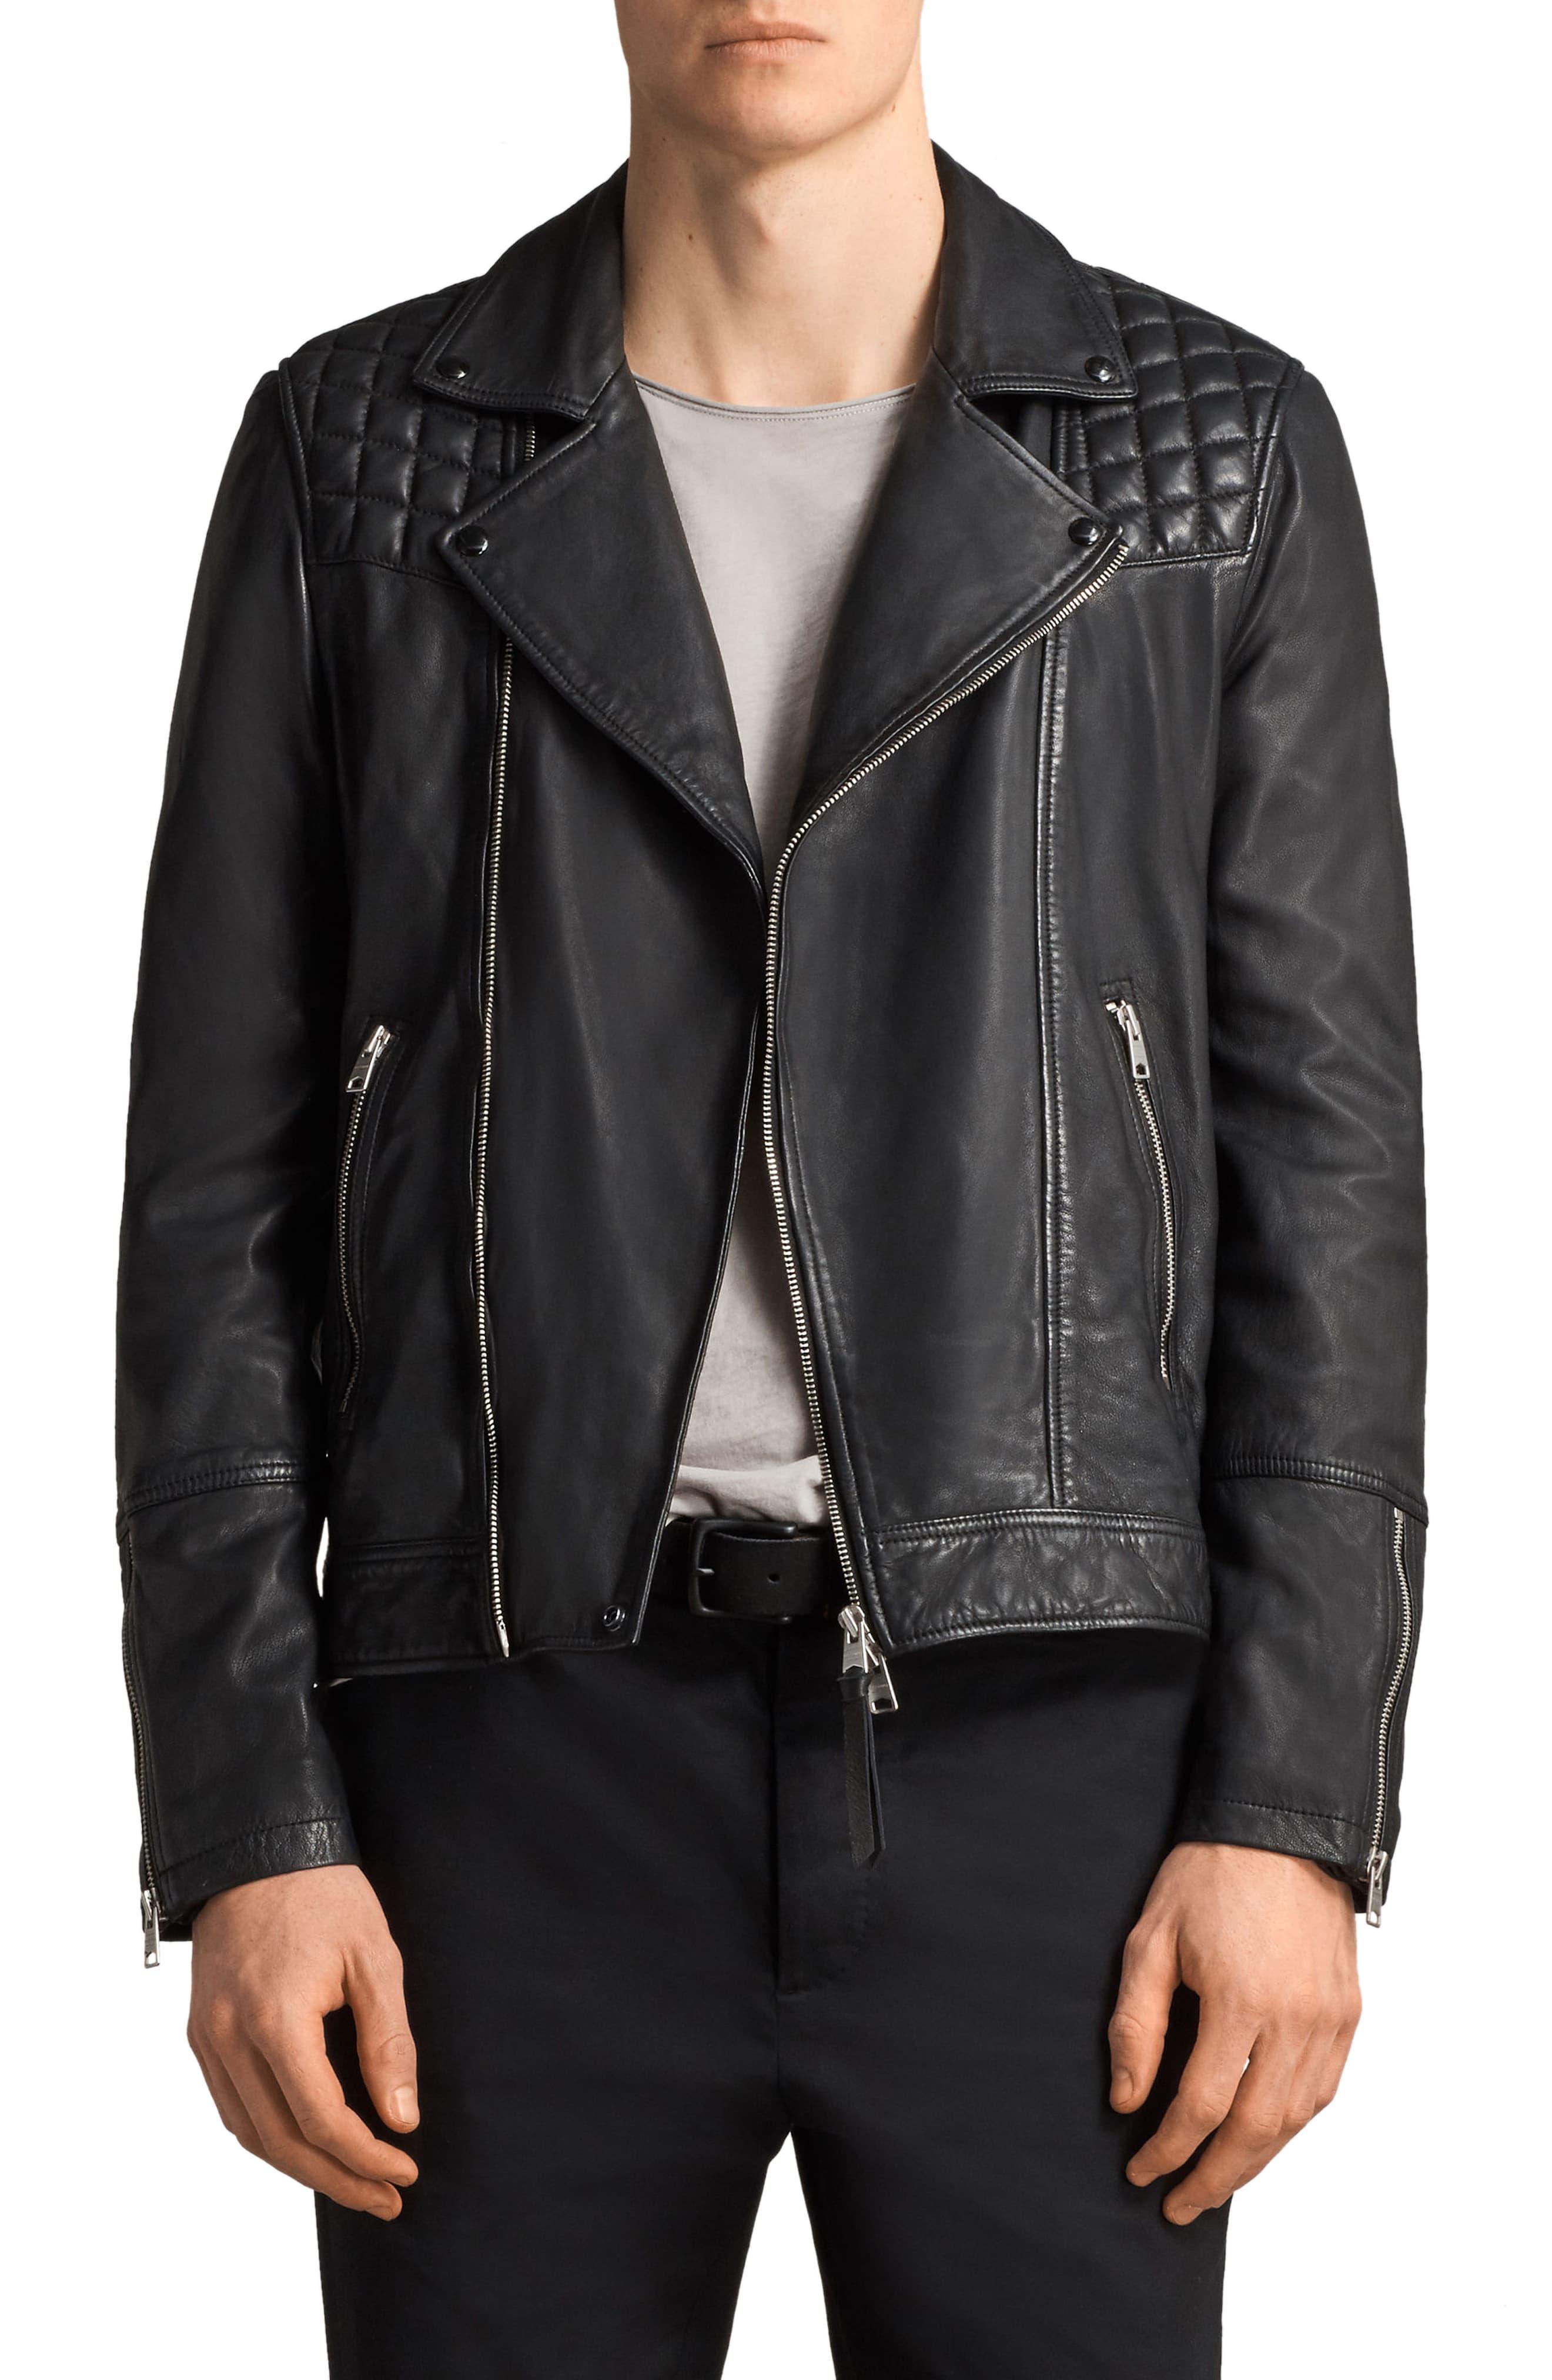 AllSaints Taro Quilted Leather Biker Jacket in Black for Men - Lyst